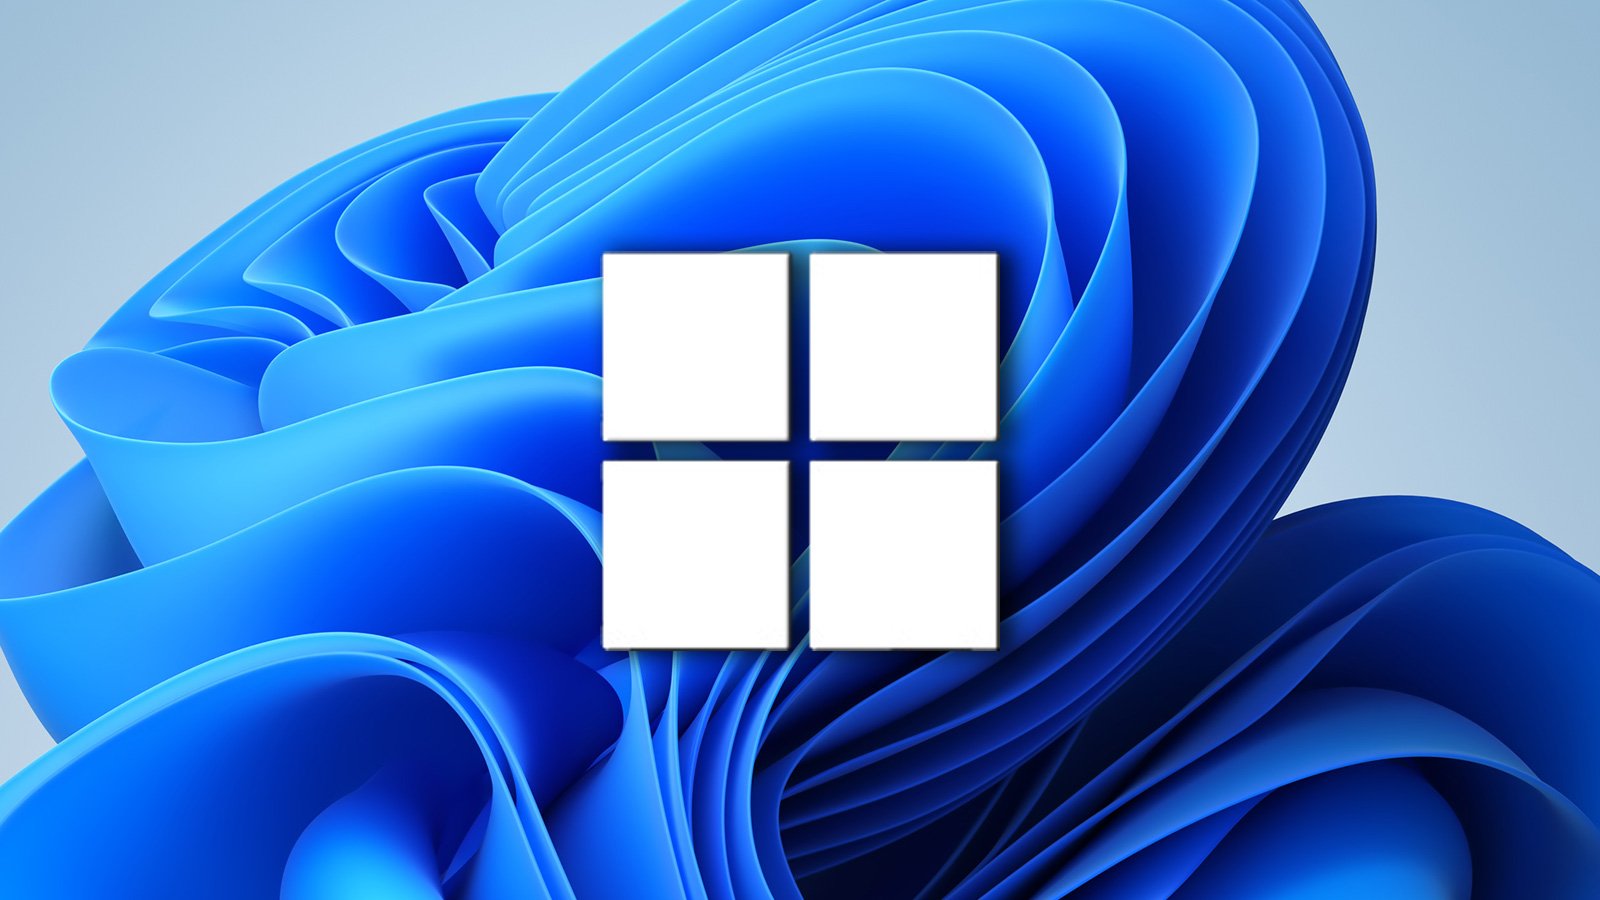 Windows 11s classic context menu is at long last improving design